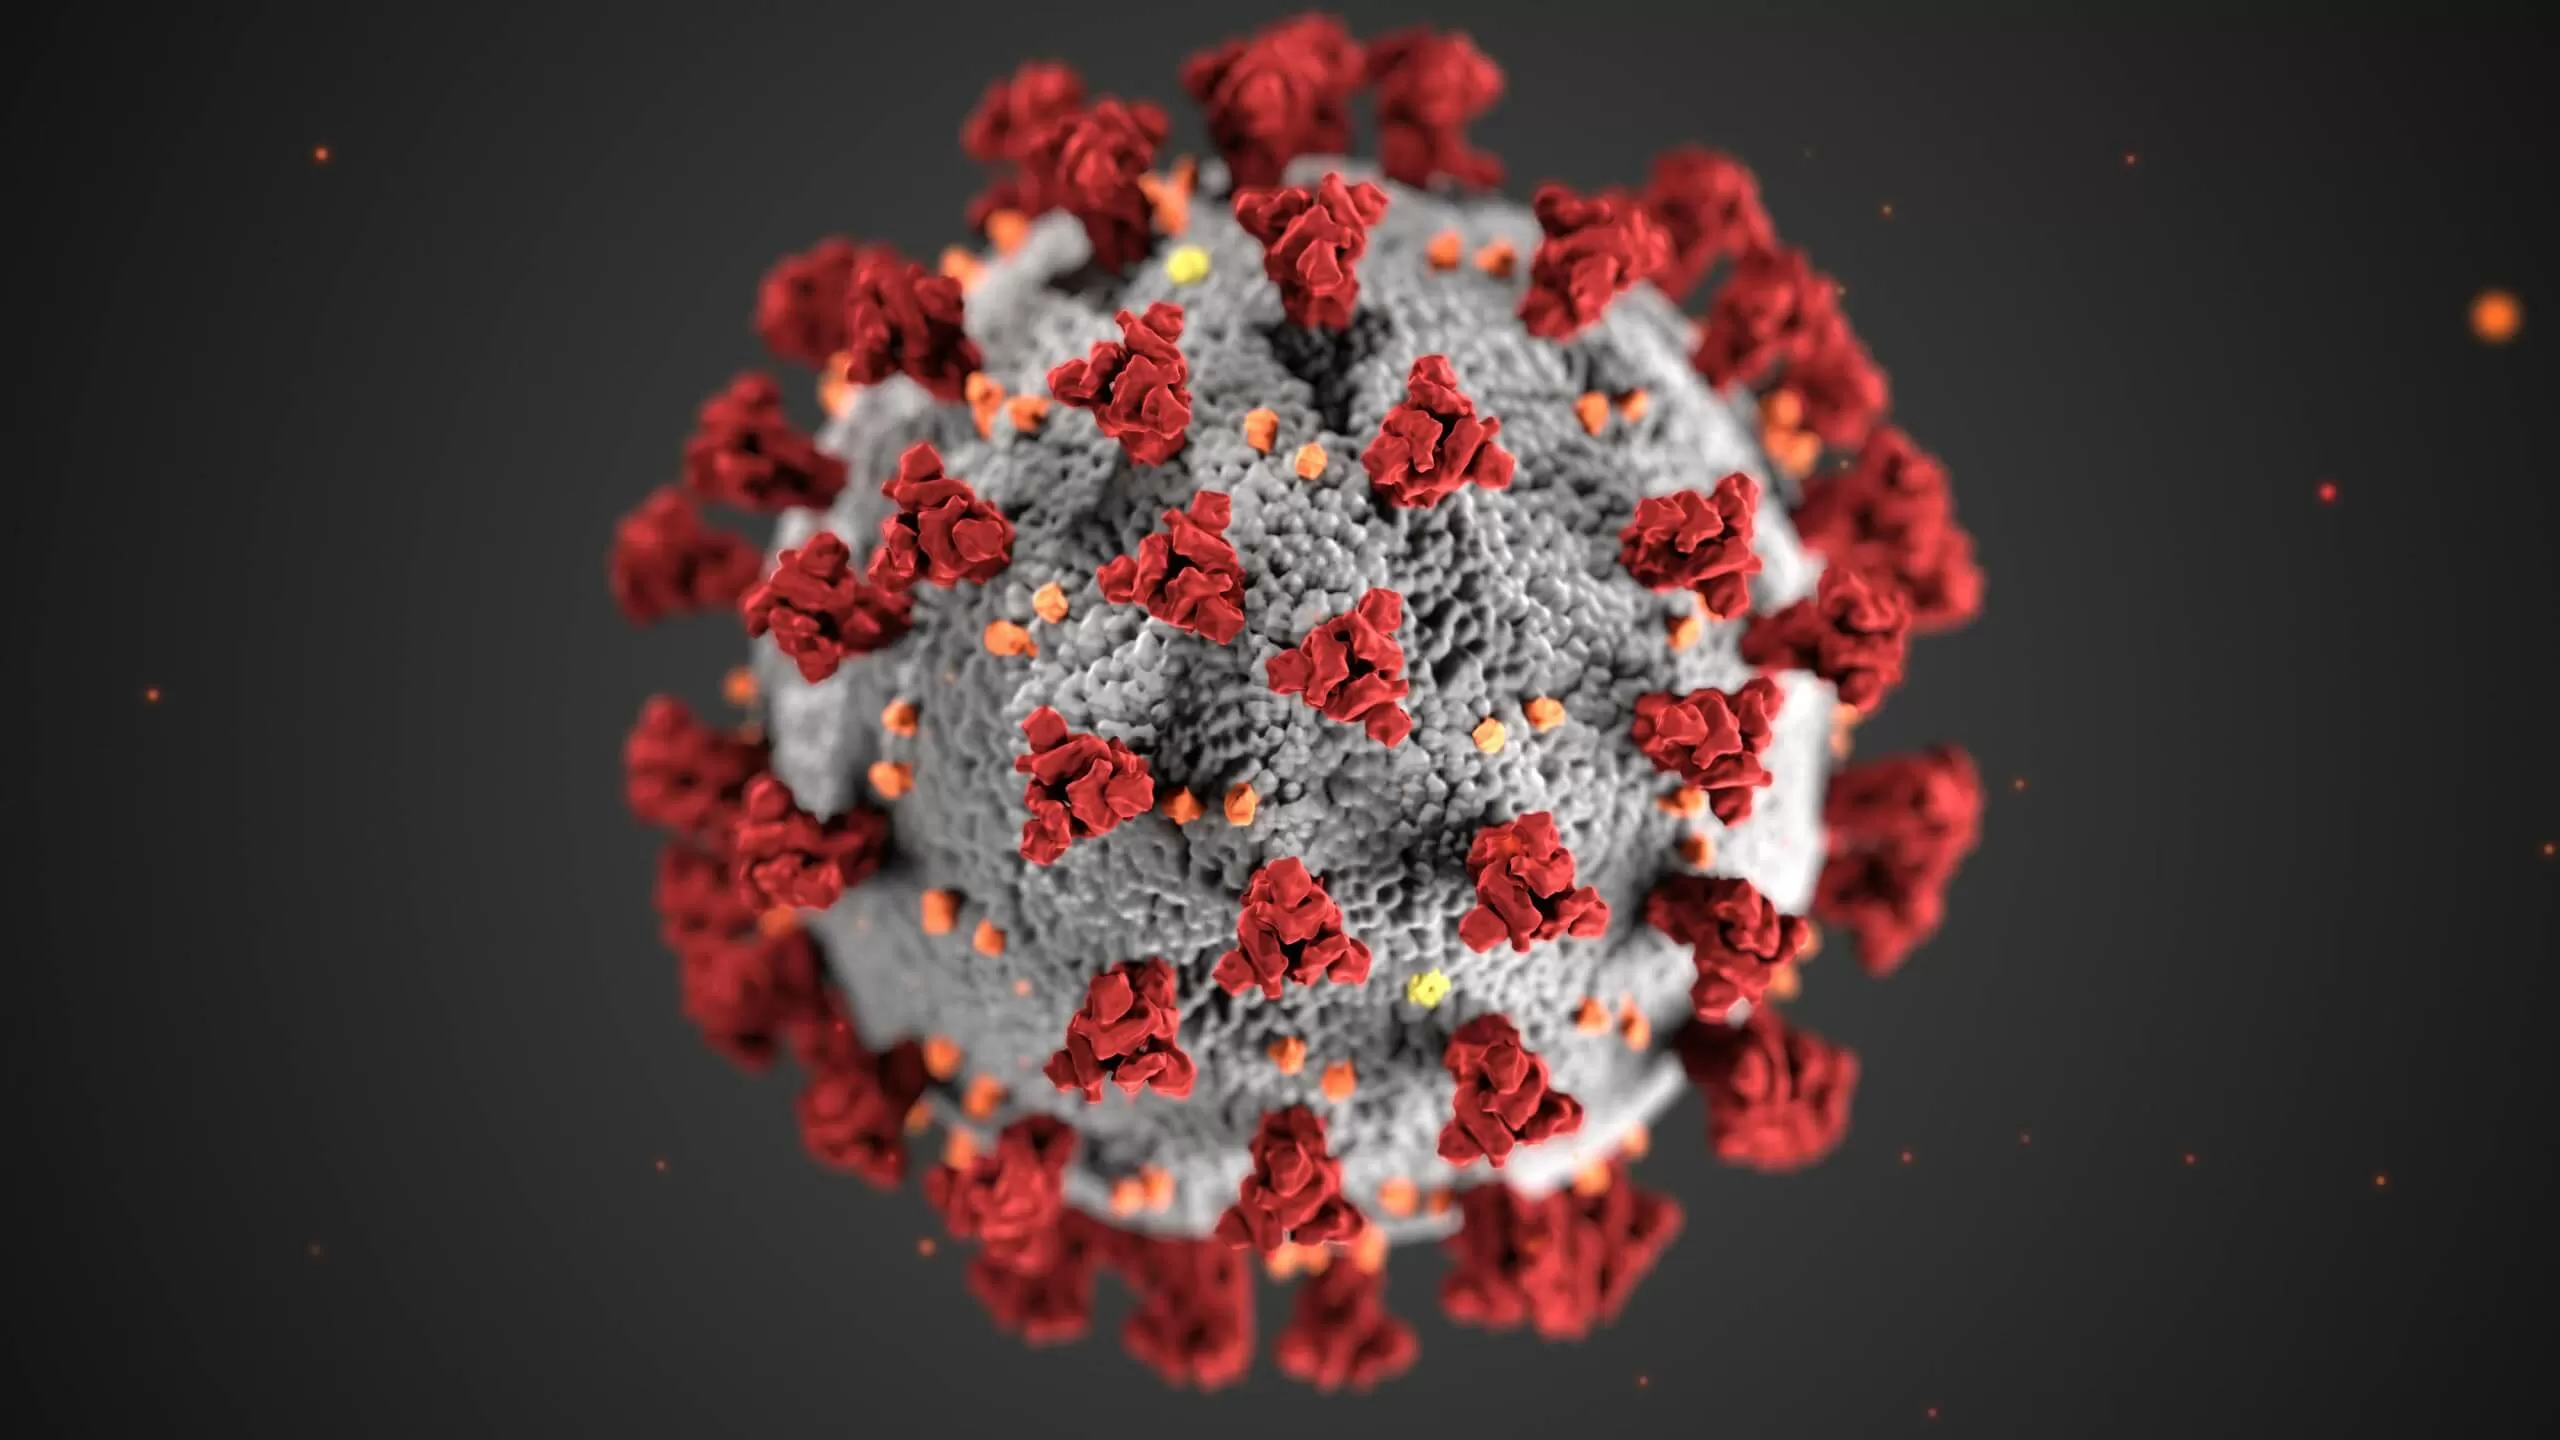 Chinese scientists working on Coronavirus treatment identify extremely effective antibodies